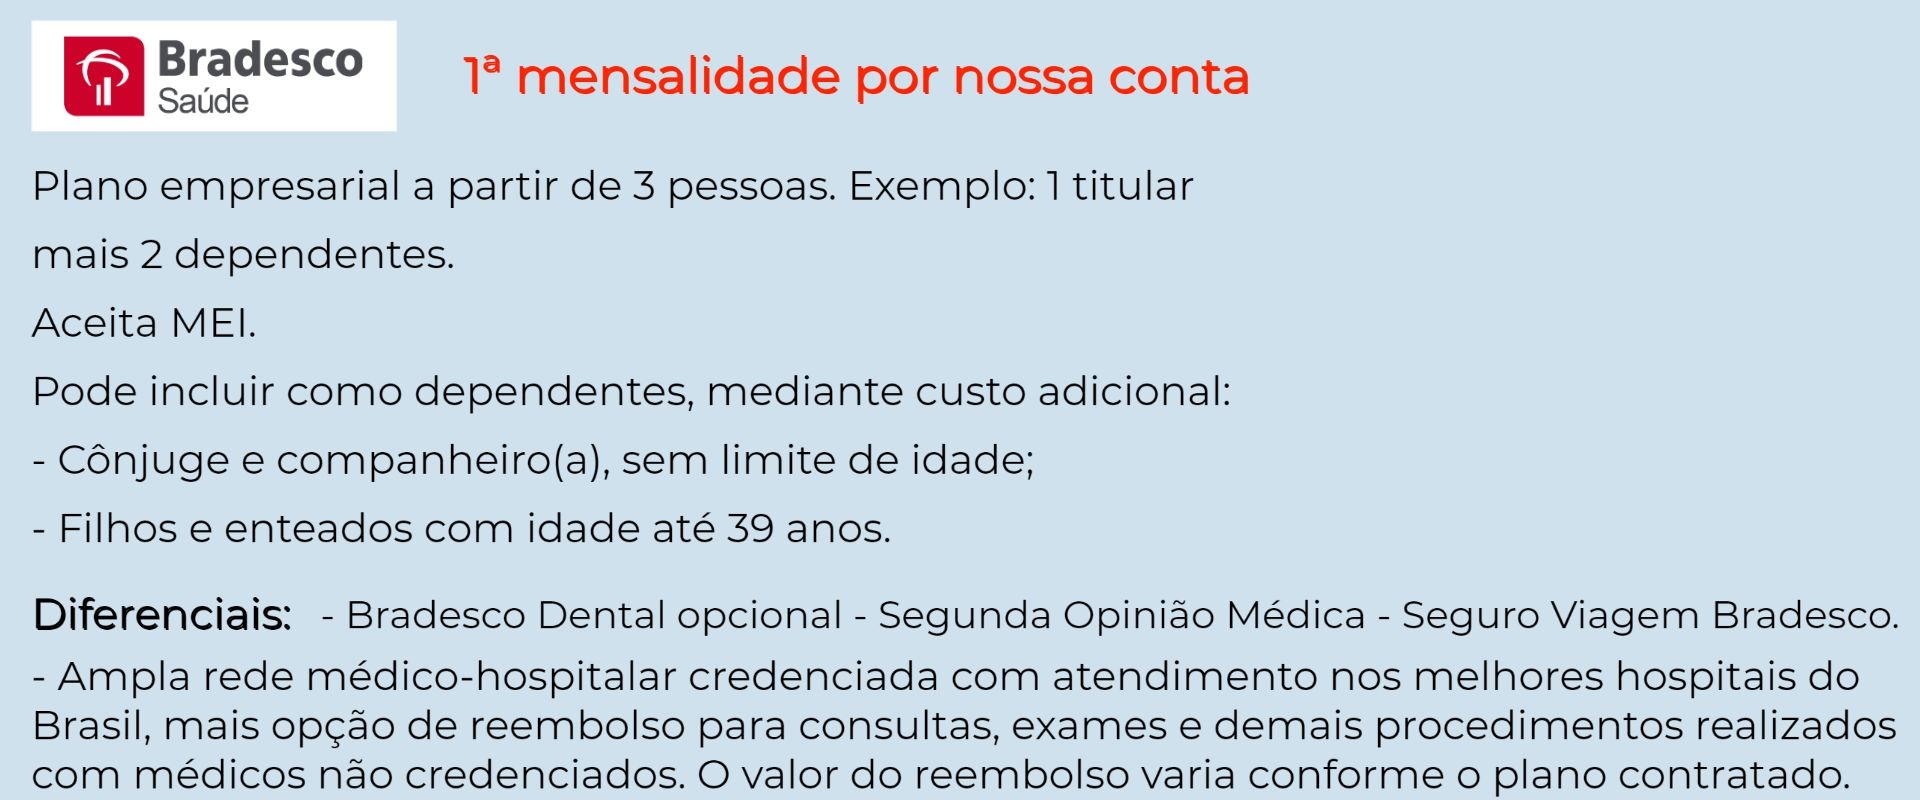 Bradesco Saúde Empresarial – Altamira